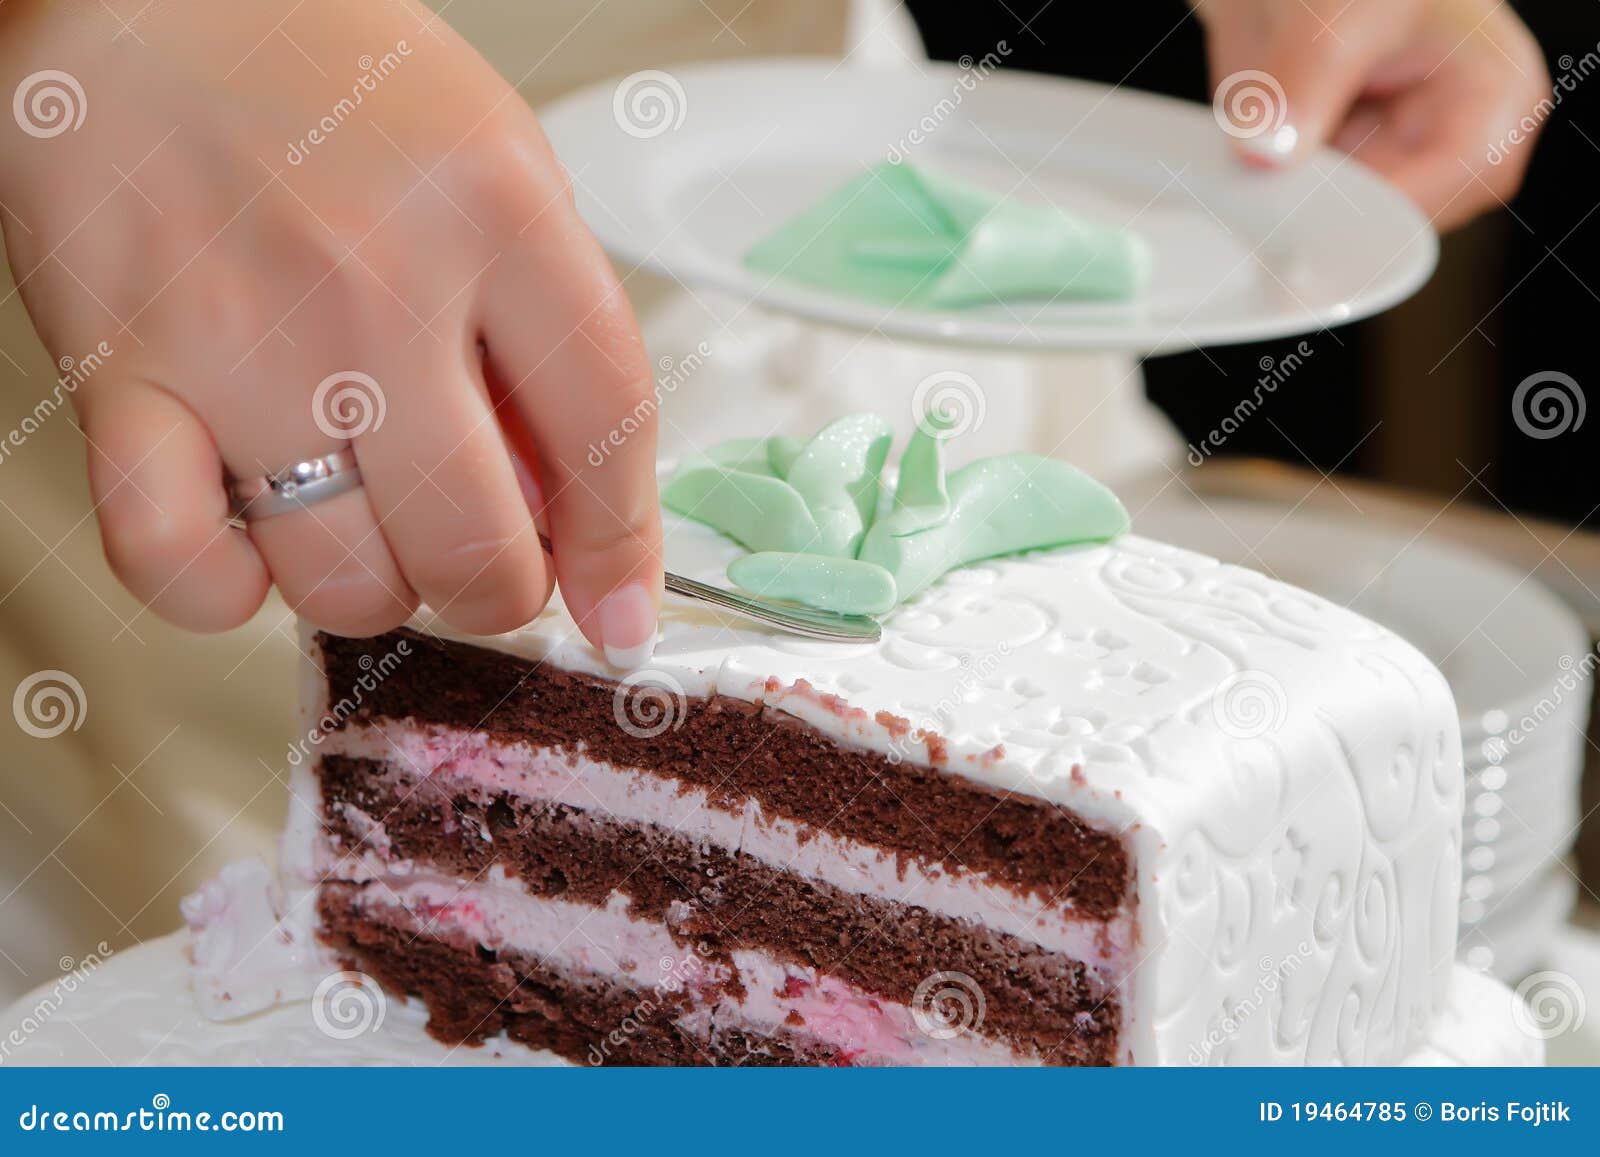 wedding cake with martzipan decoration